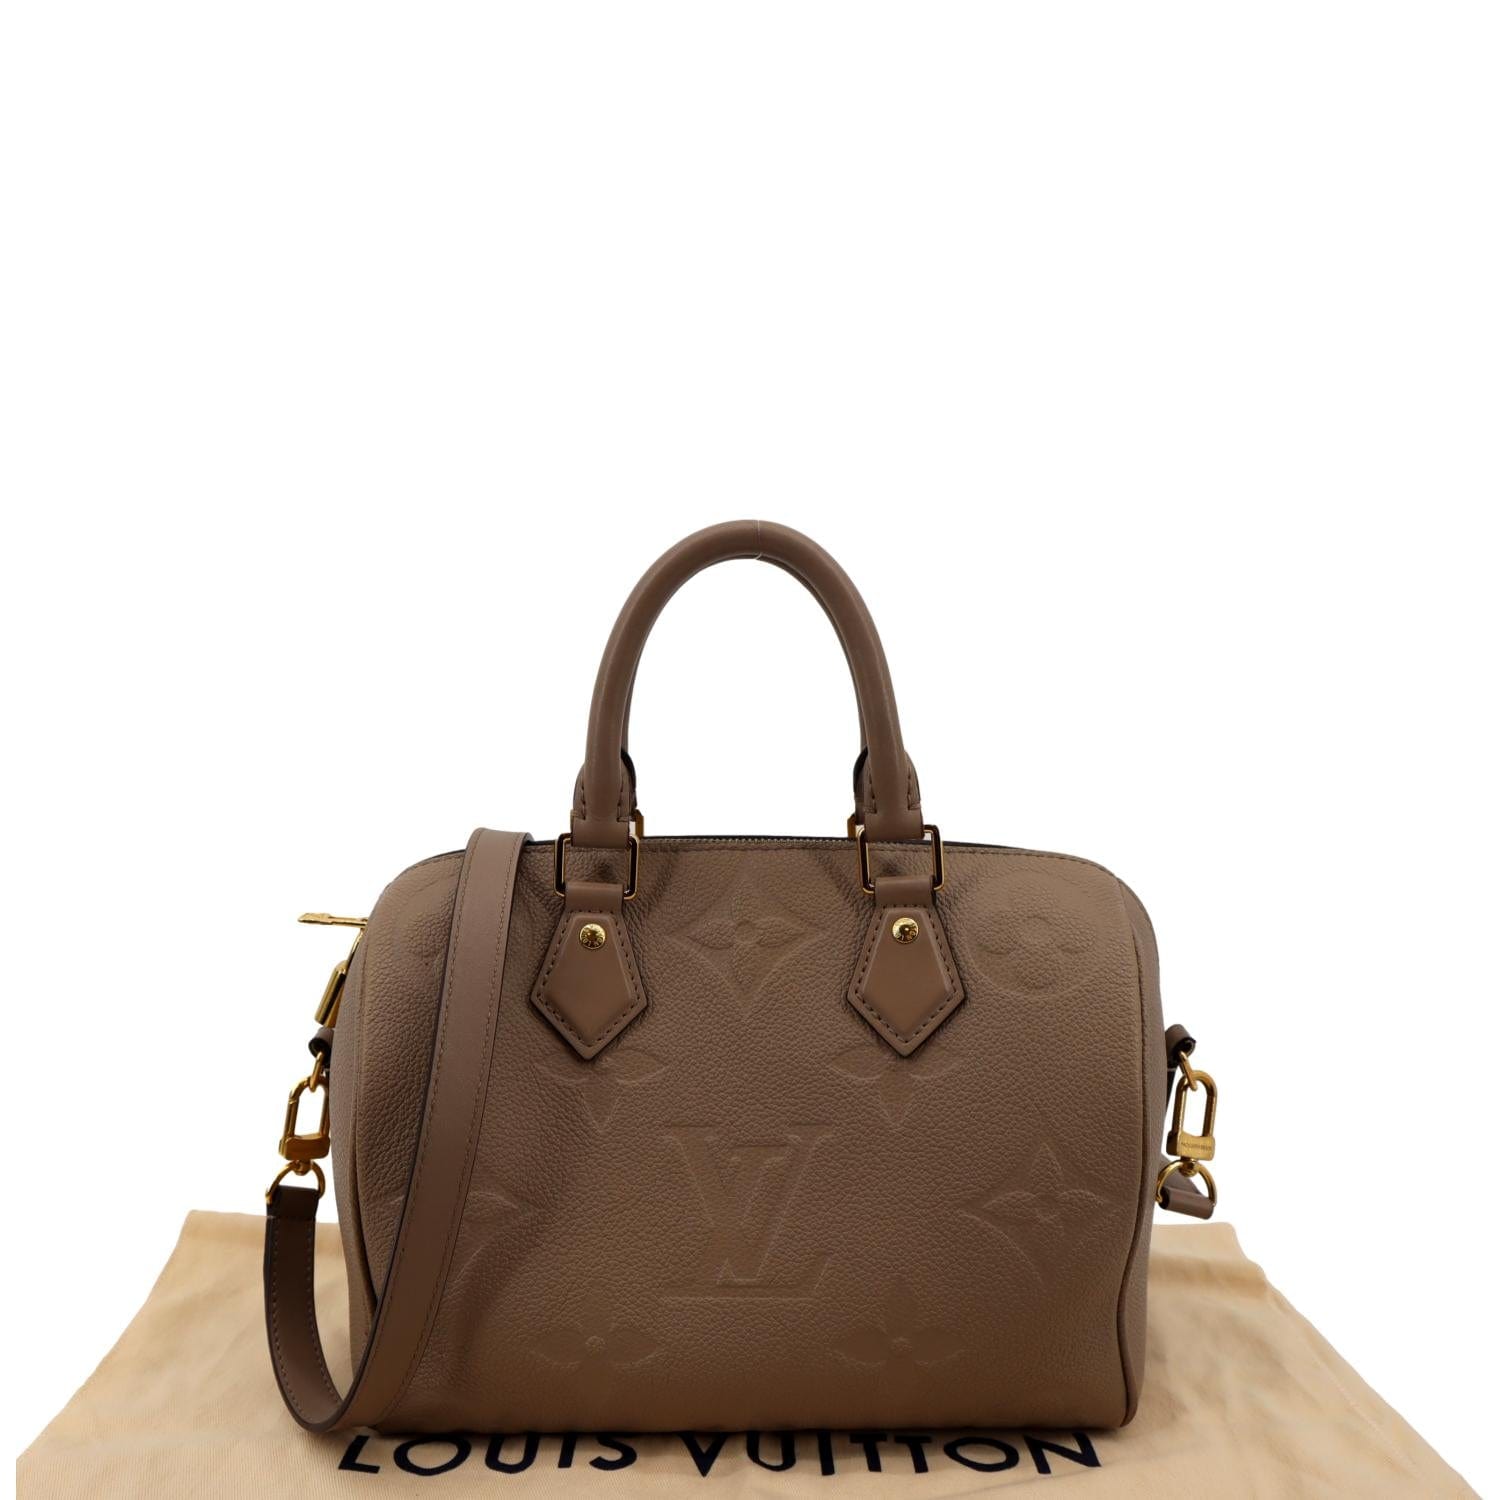 Louis Vuitton Speedy 25 bandouliere caramel monogram empreinte